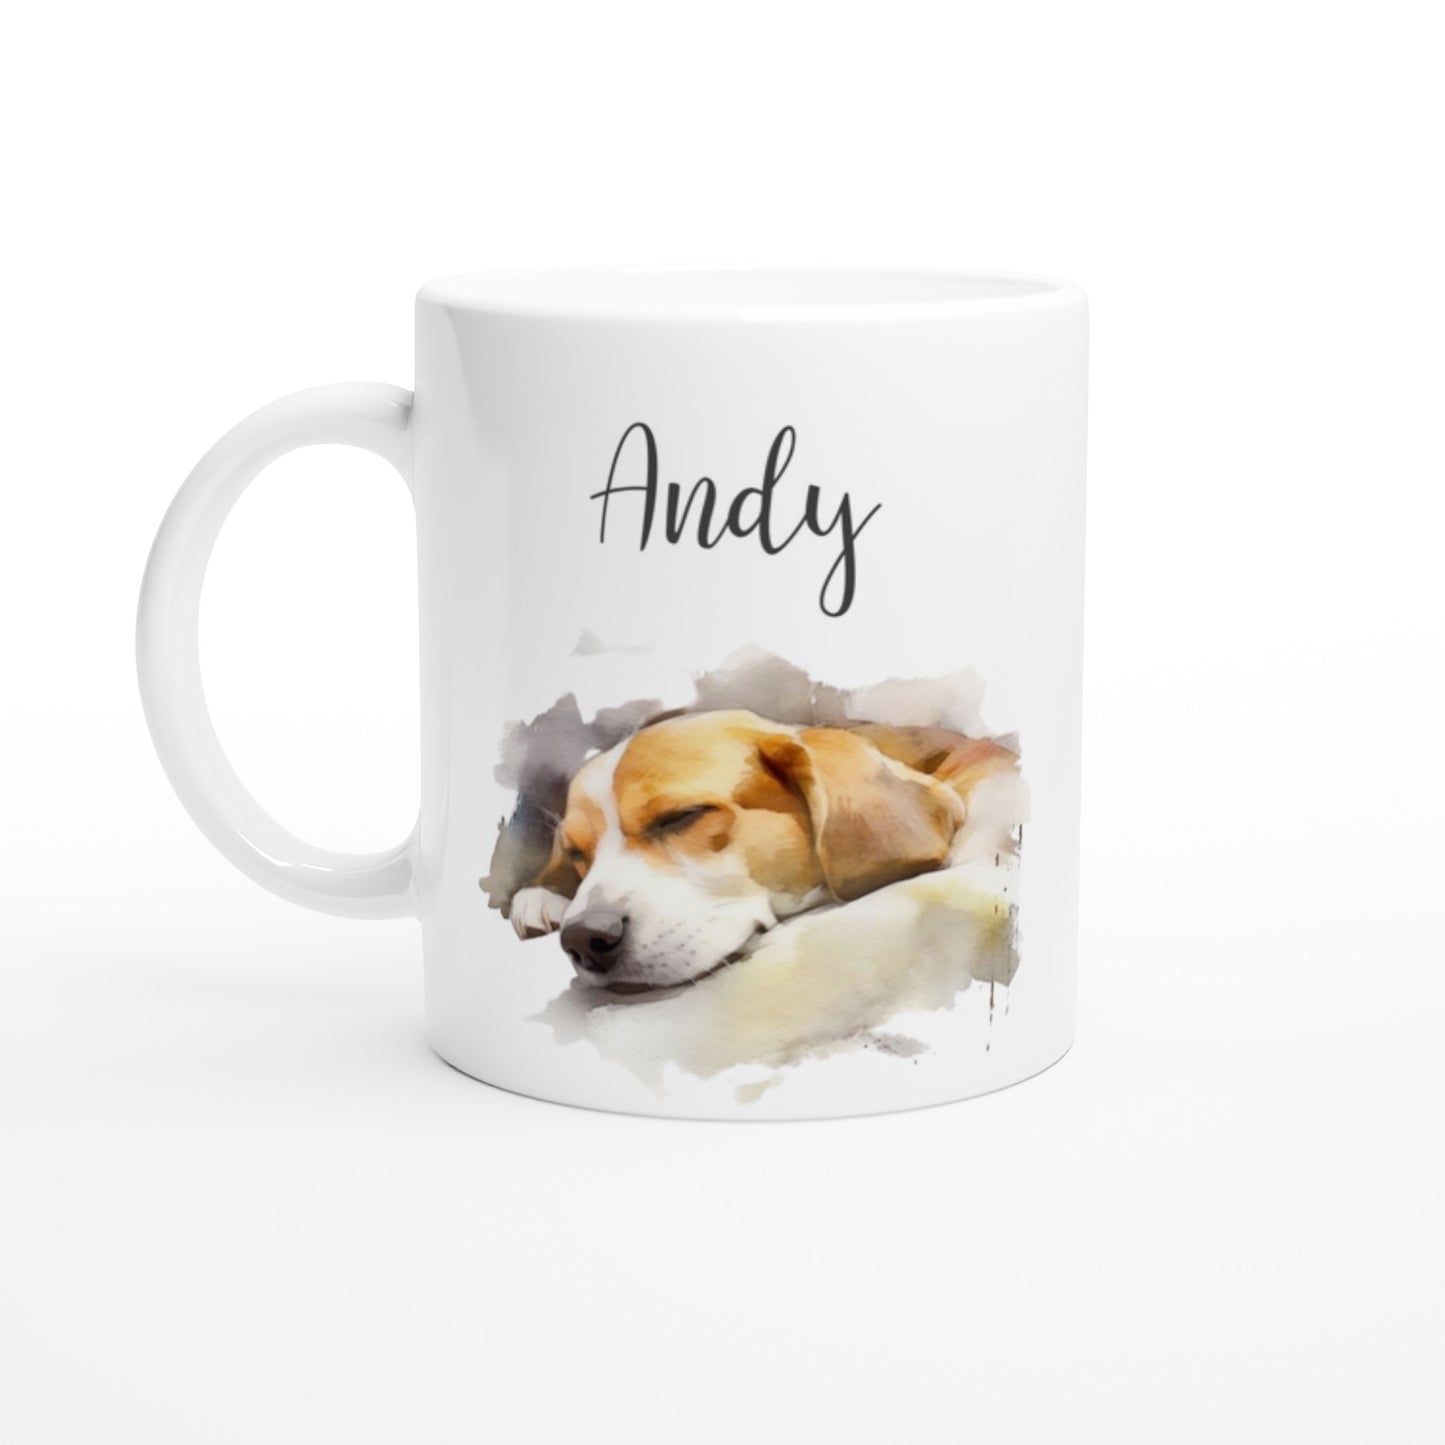 Personalised beagle mug with name